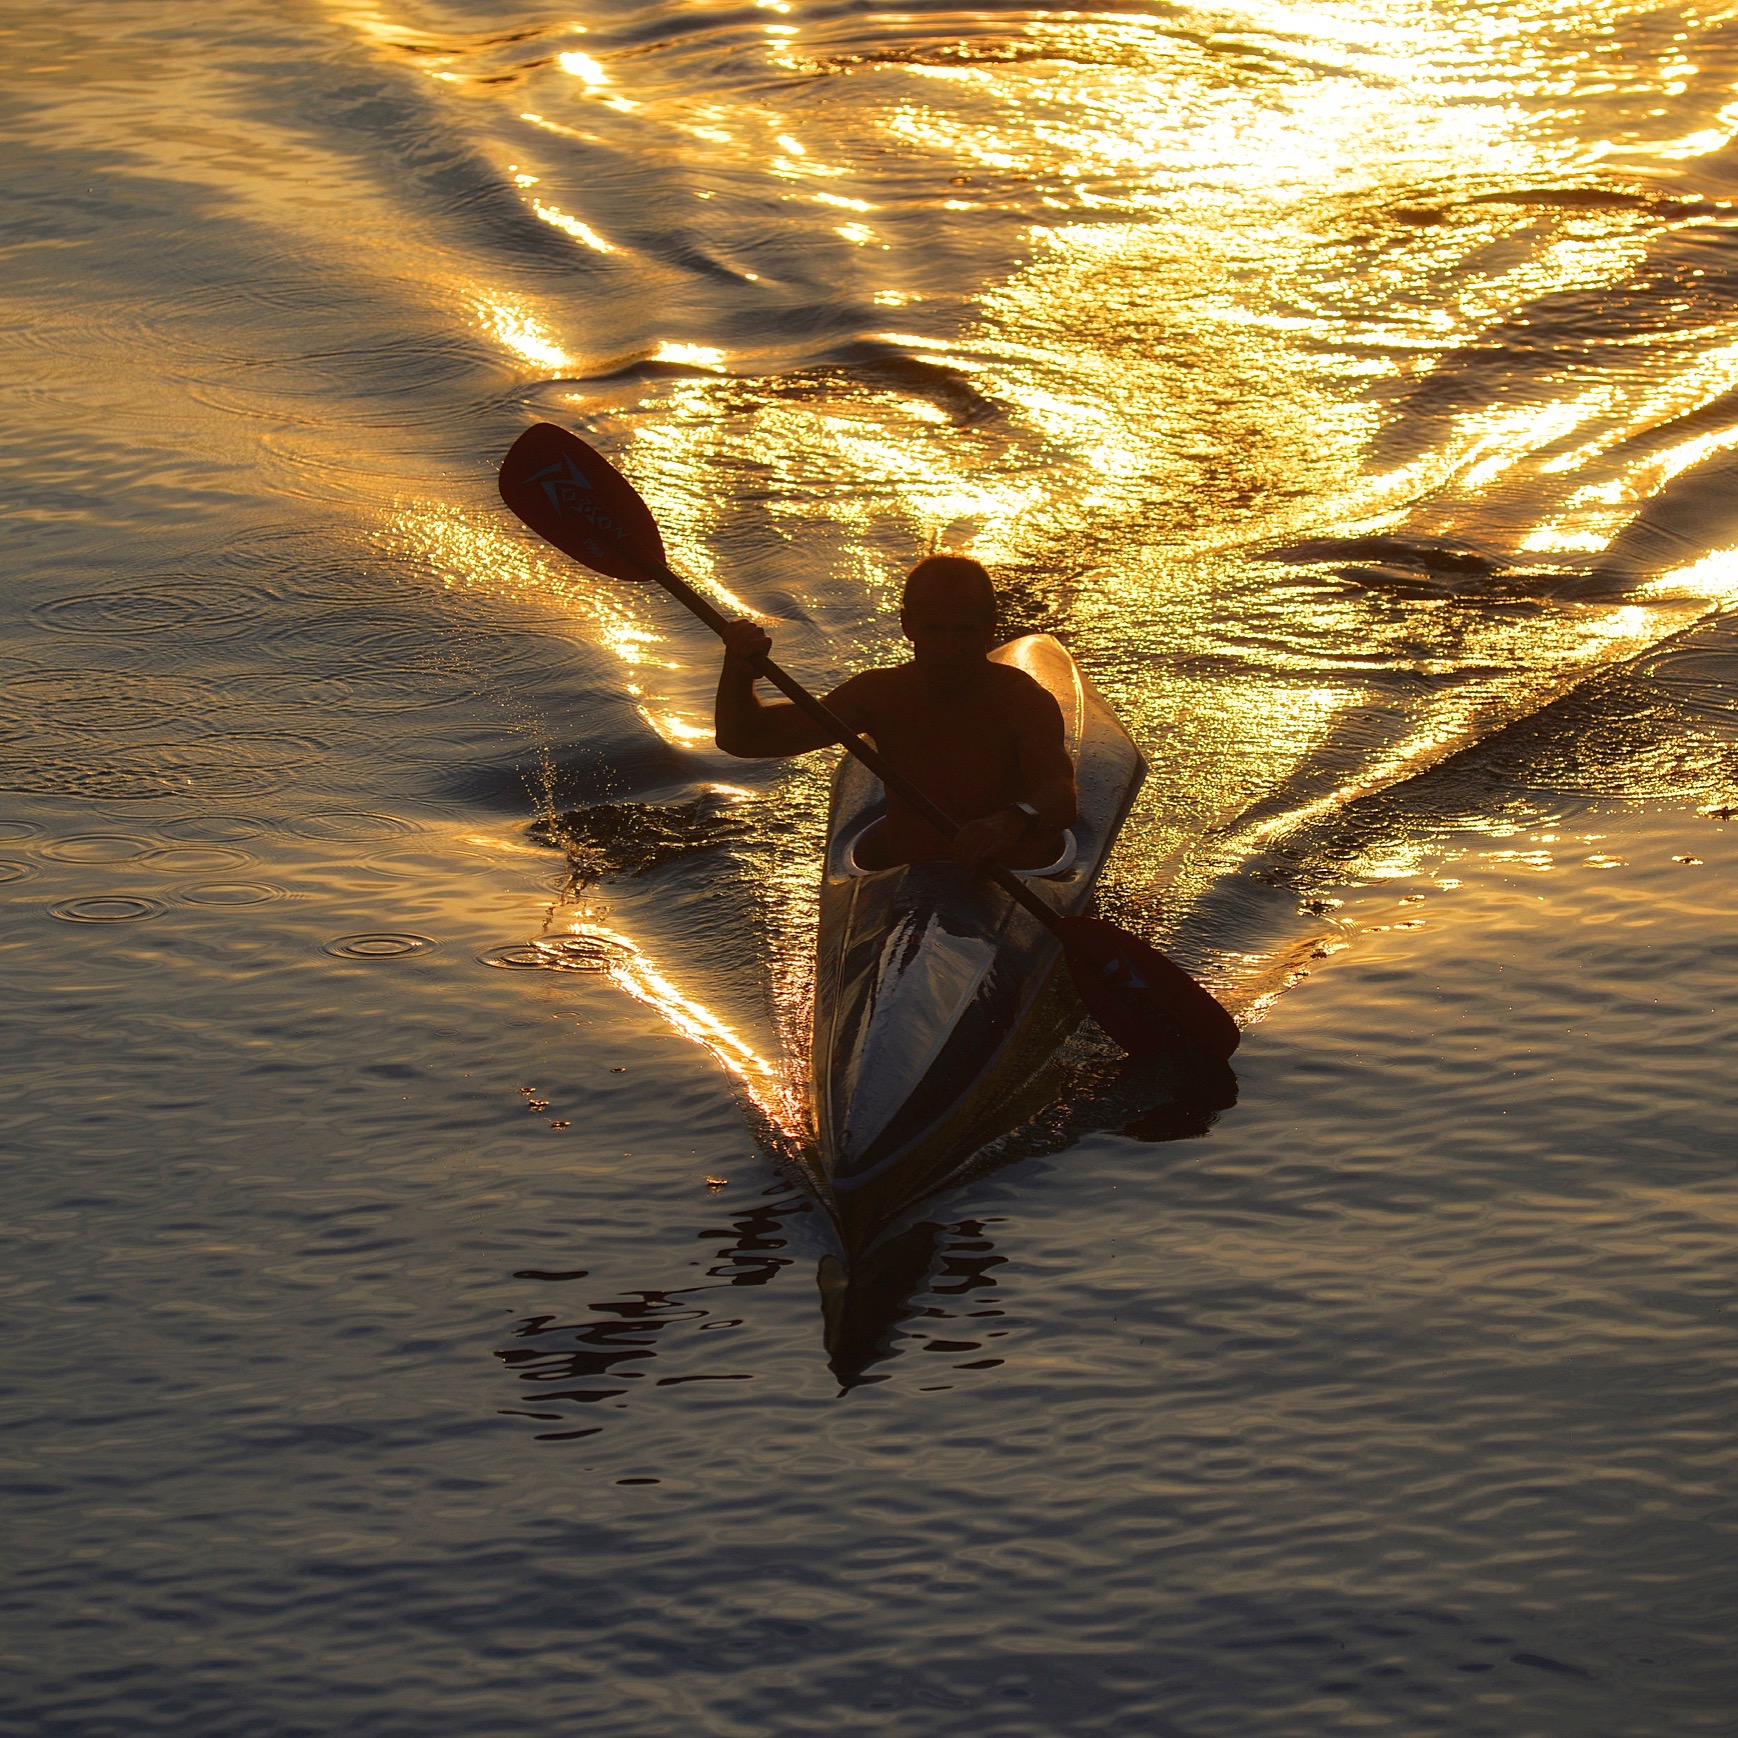 Canoeing on the lake golden...